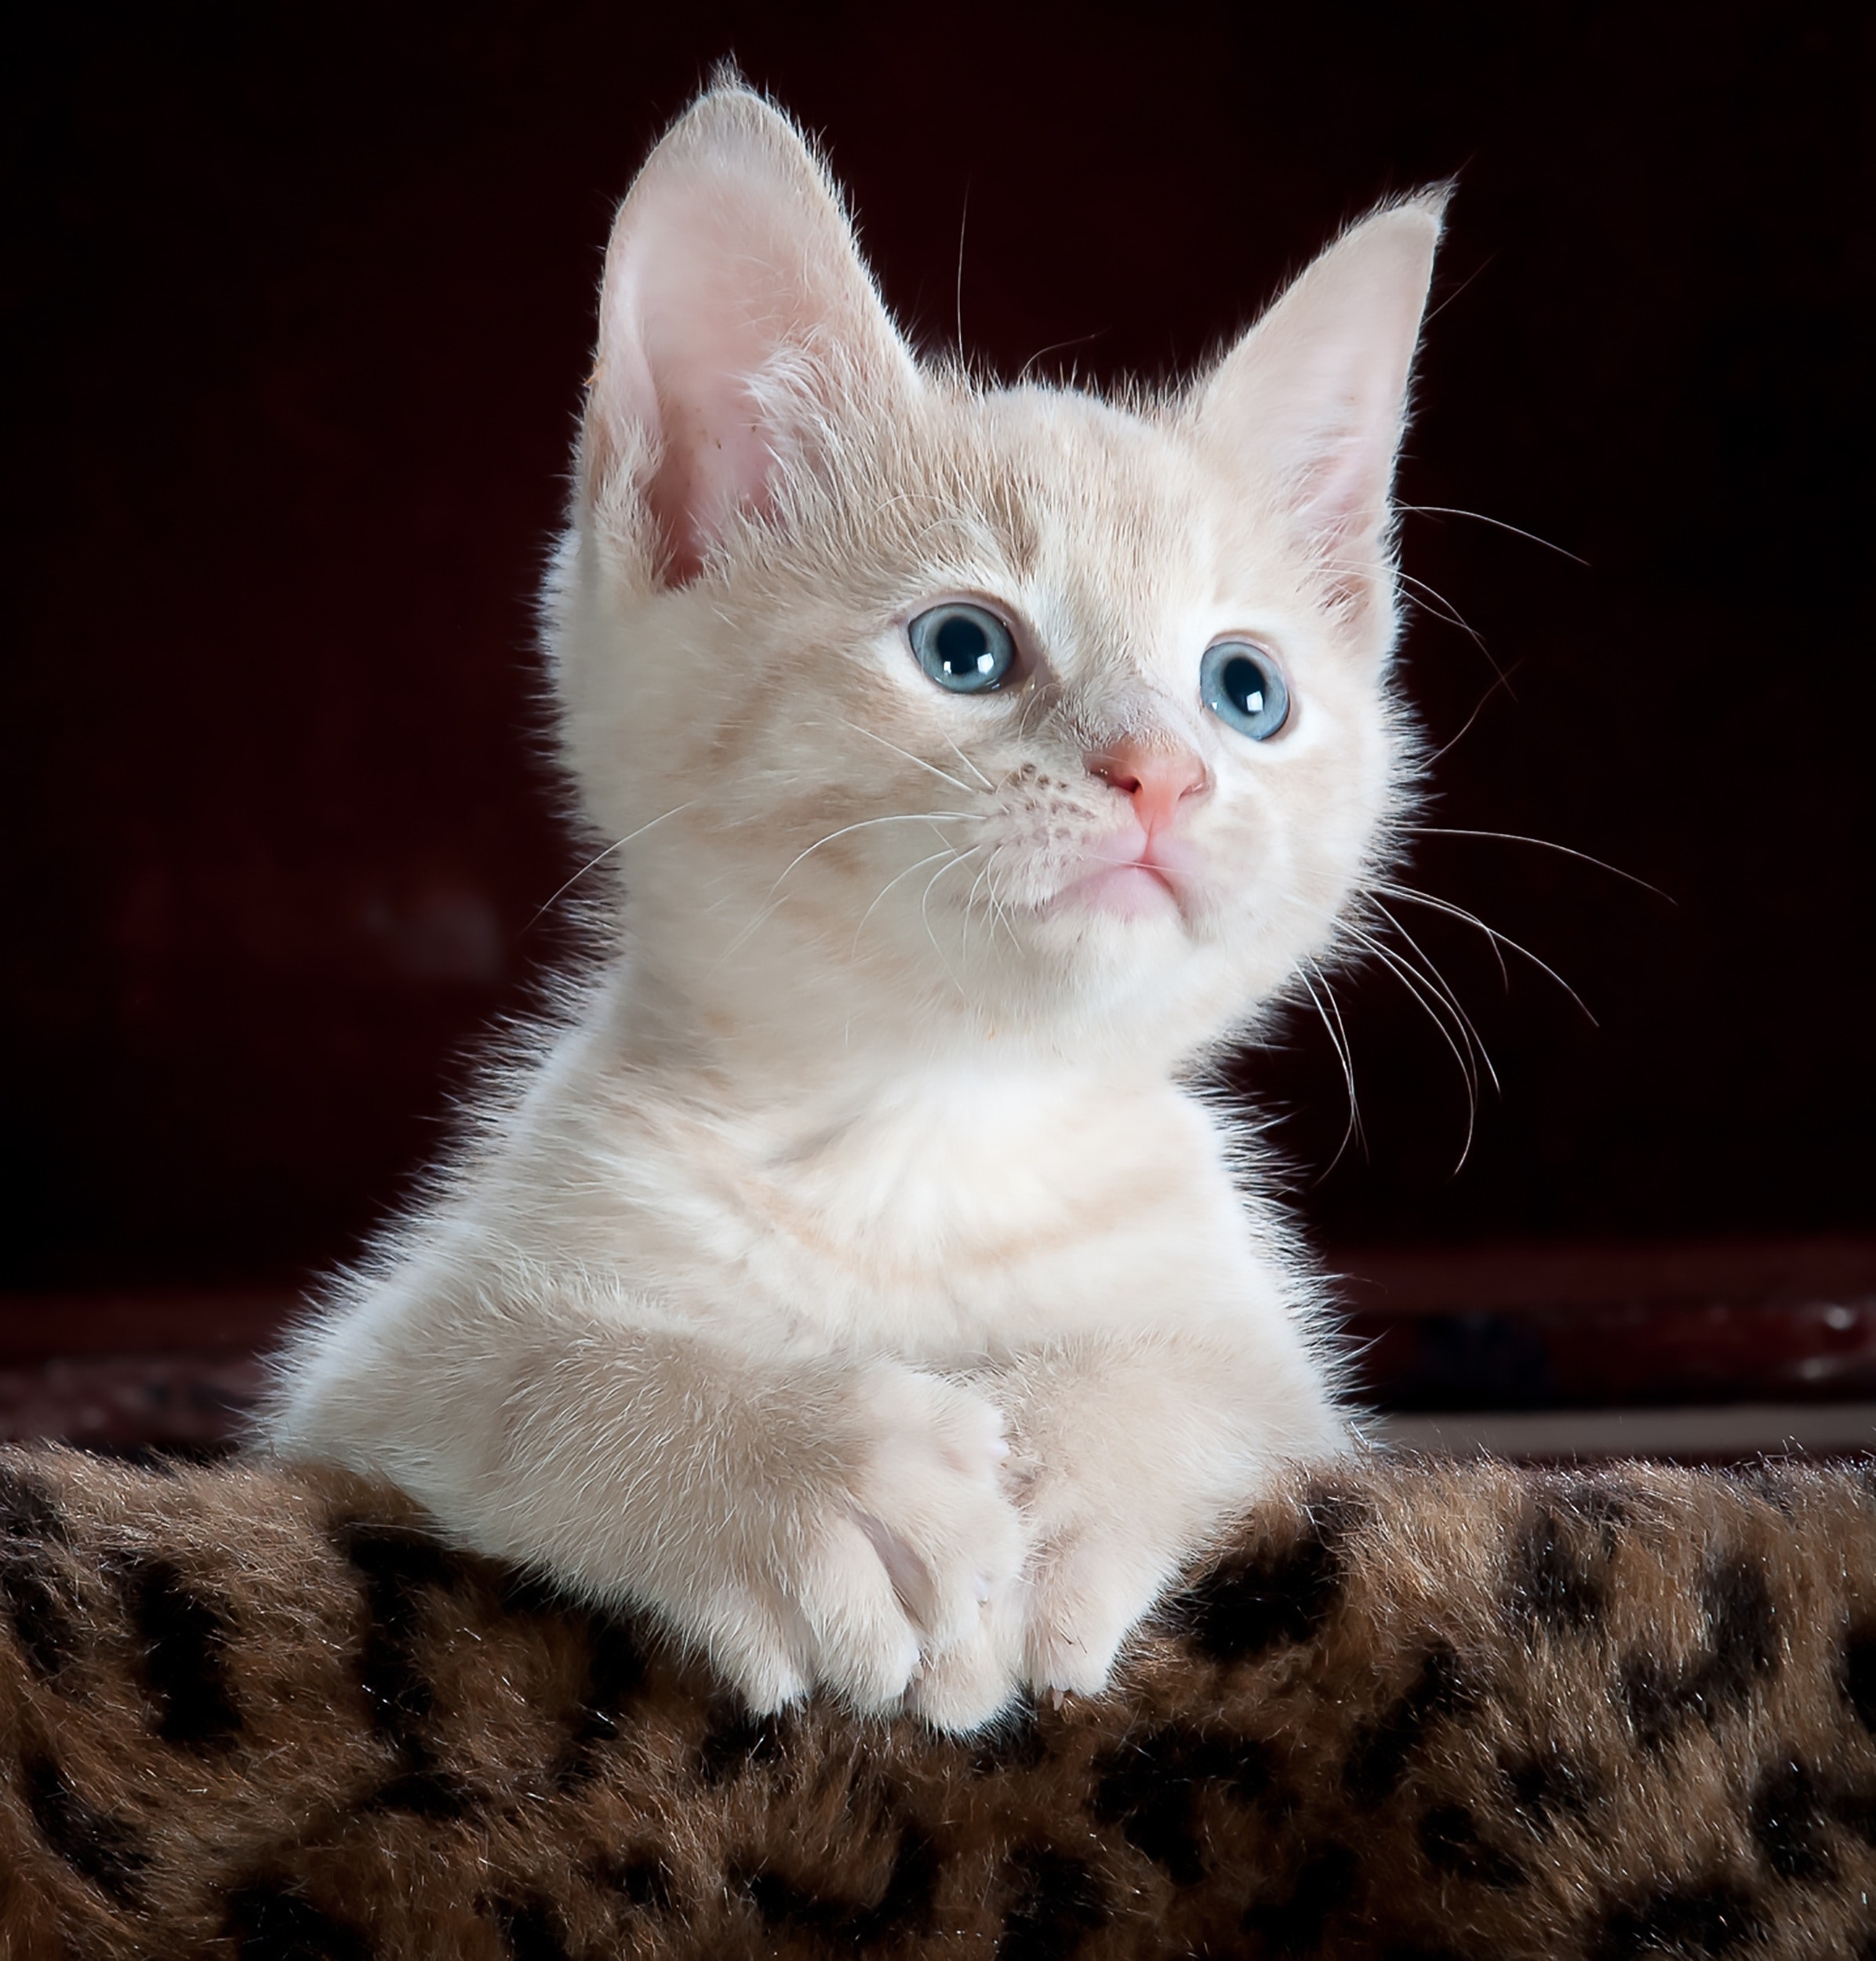 Cat Images · Pexels · Free Stock Photos